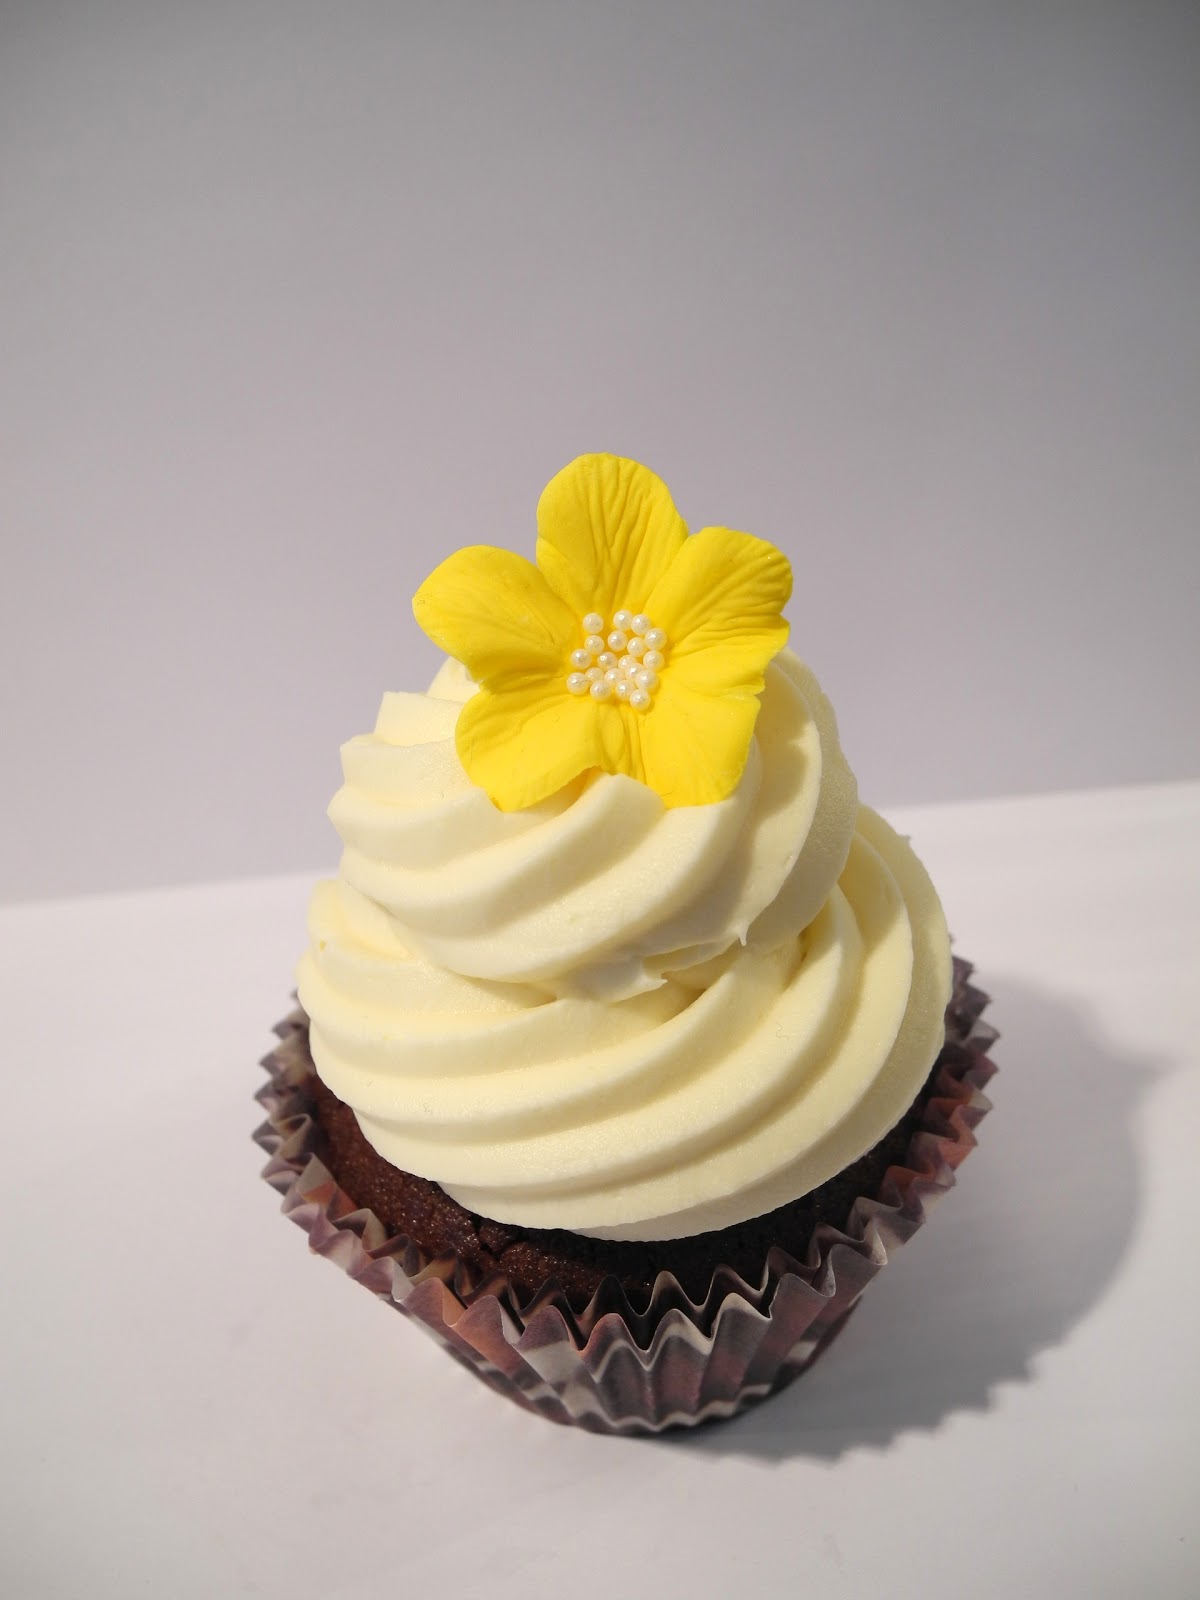 chocolate cupcakes white frosting en gul blomma att toppa frostingen med och pa tal om frostingen sa 